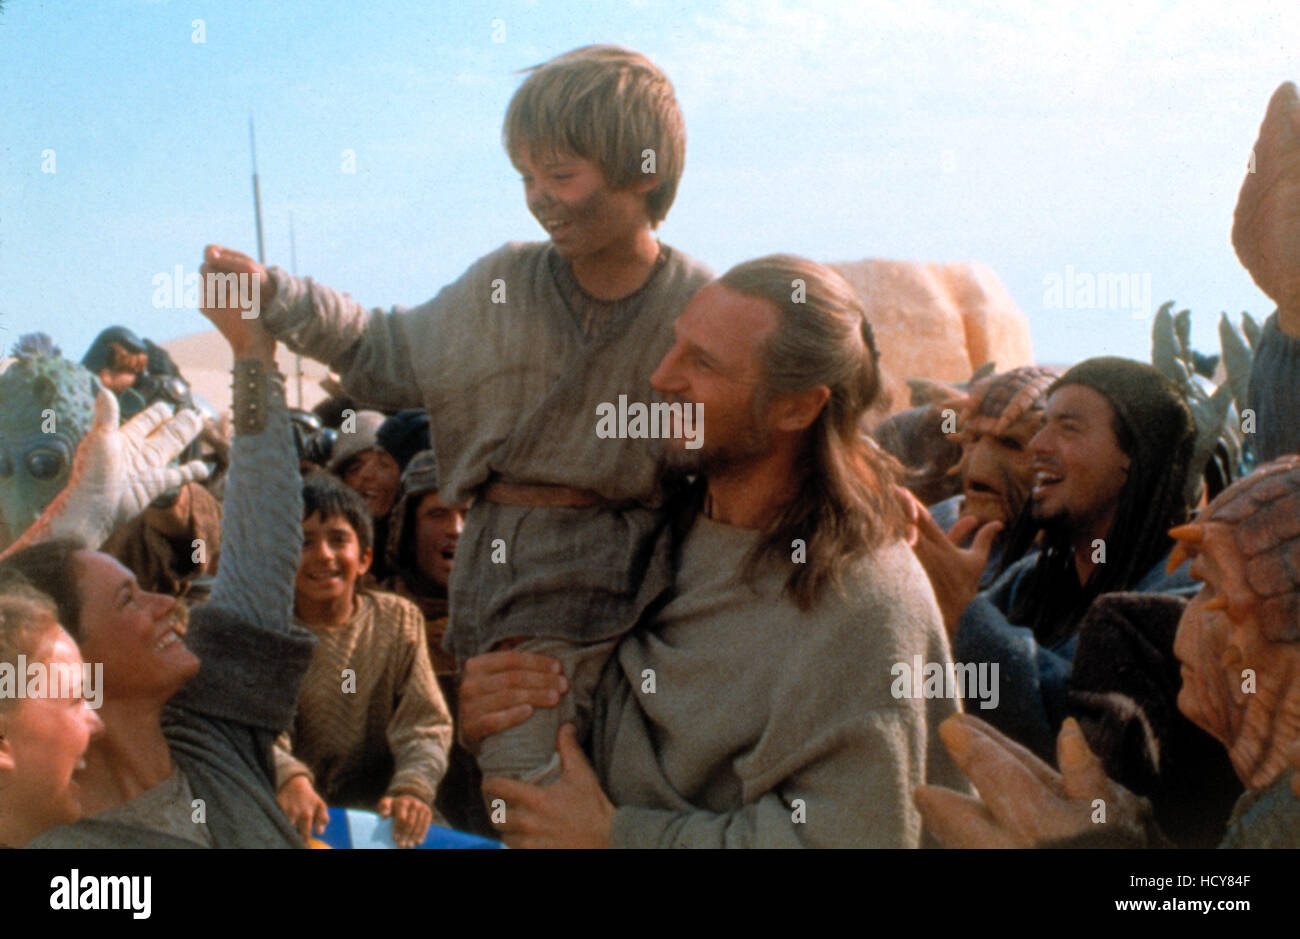 STAR WARS: EPISODE I - THE PHANTOM MENACE, Jake Lloyd, Liam Neeson, 1999. Stock Photo